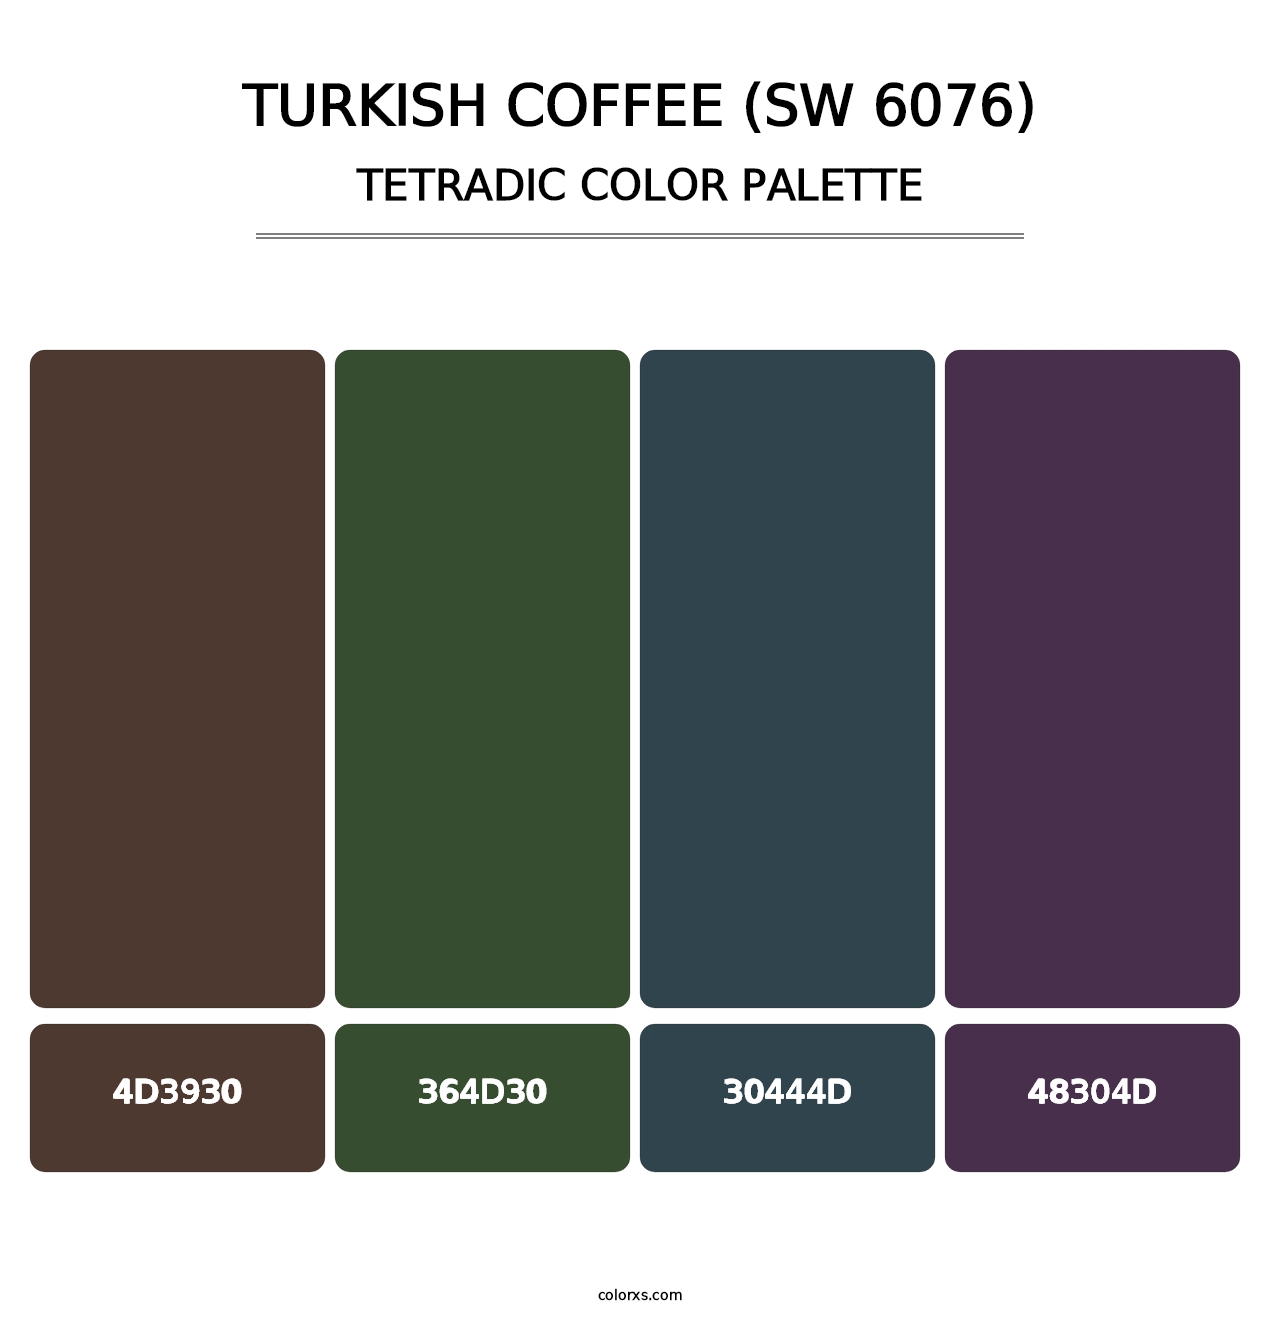 Turkish Coffee (SW 6076) - Tetradic Color Palette